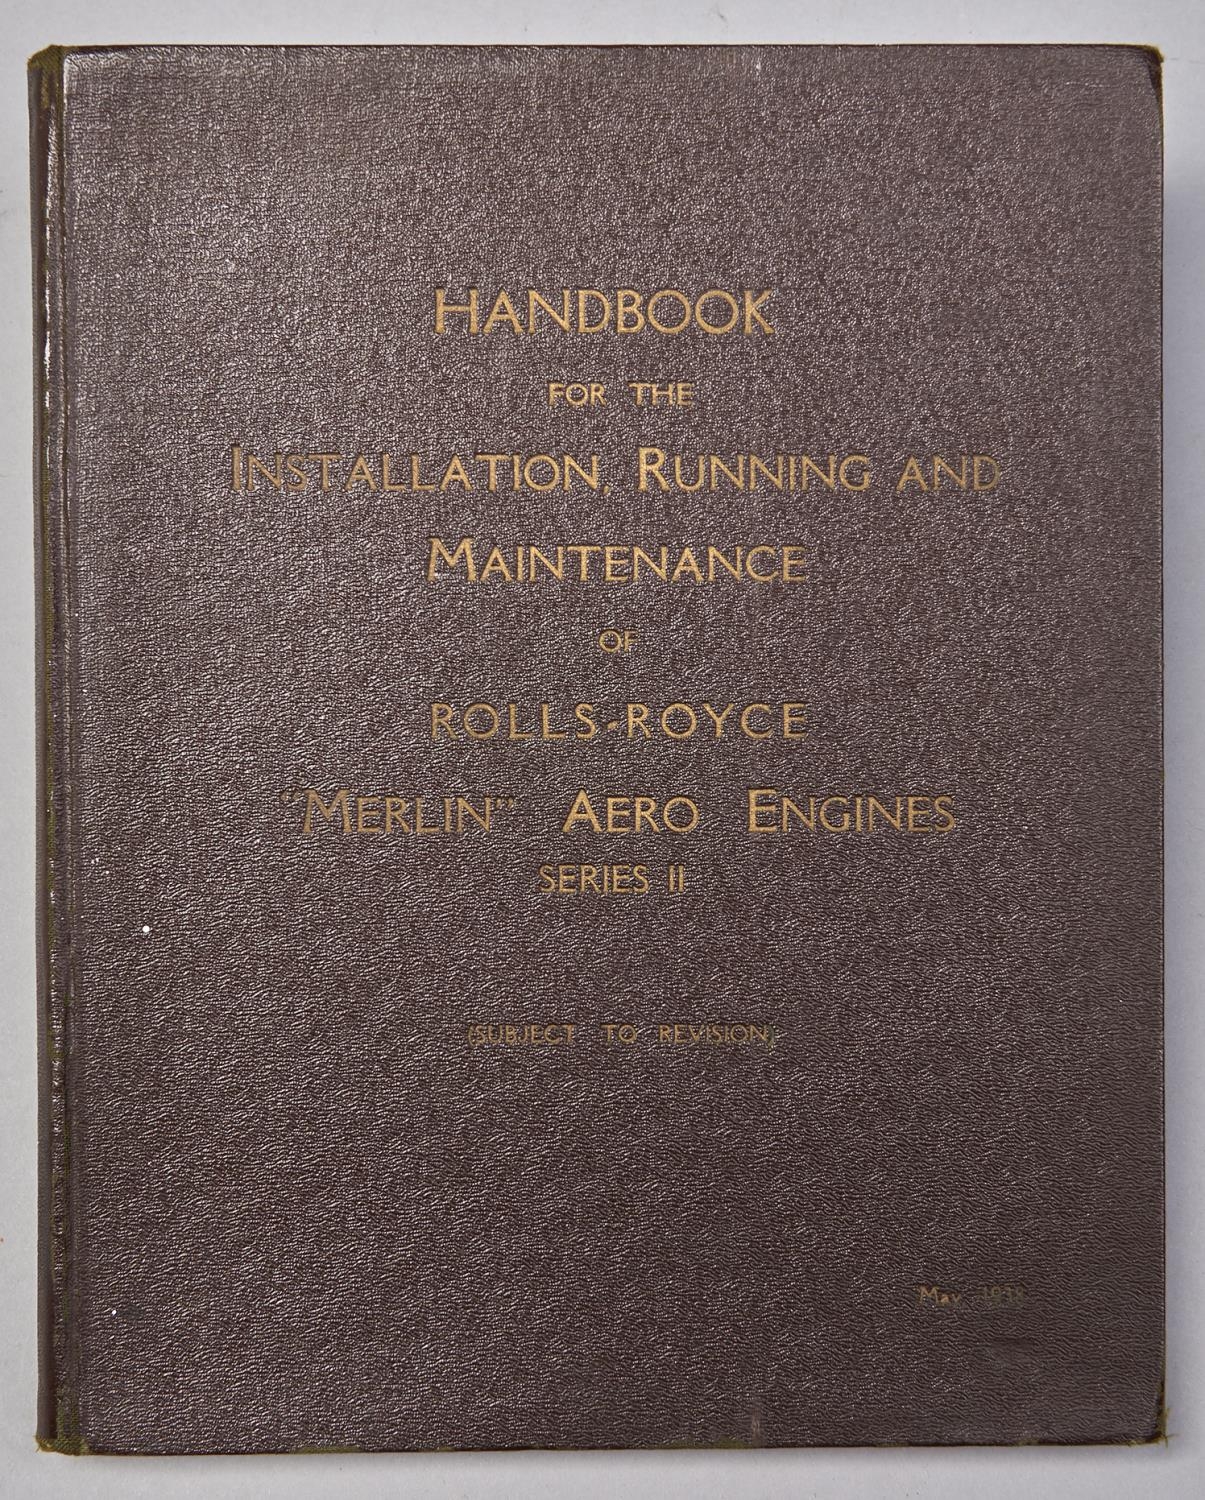 Aeronautica. Rolls Royce Ltd - Handbook for the Installation Running and Maintenance of Rolls-